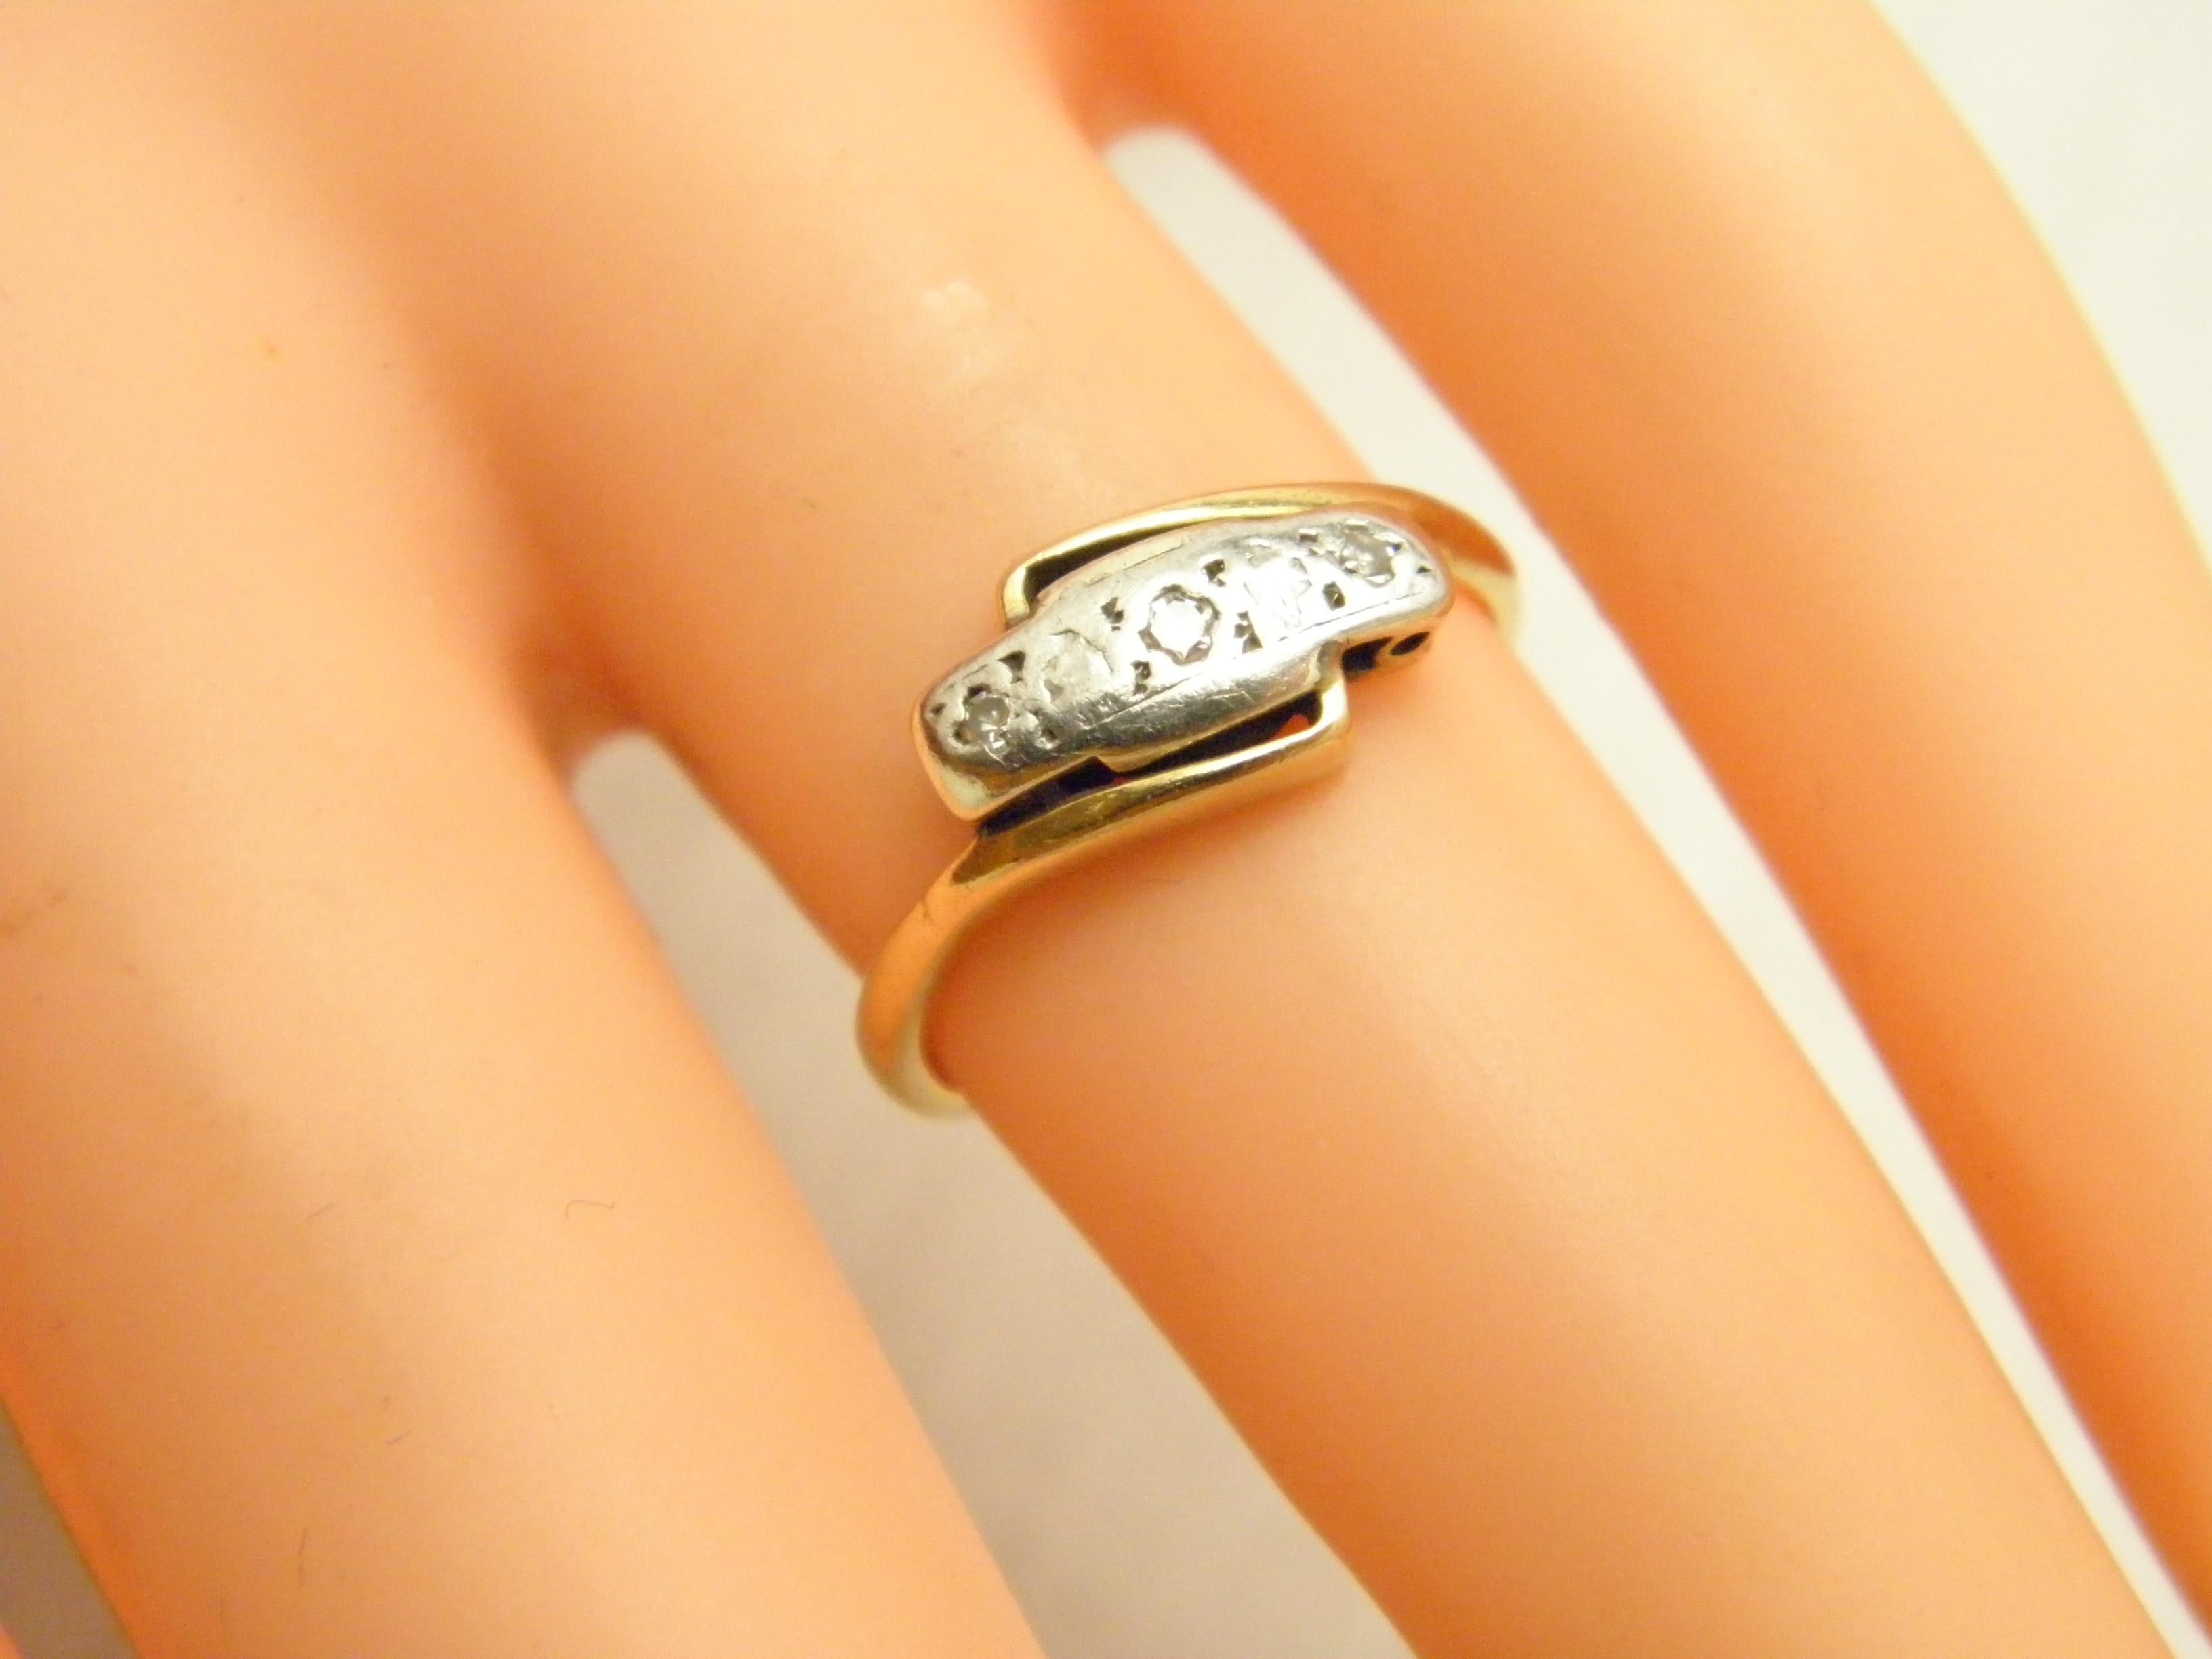 c1800 Antique 18ct Gold Platinum Diamond Trilogy Bypass Engagement Ring Size I.5 5